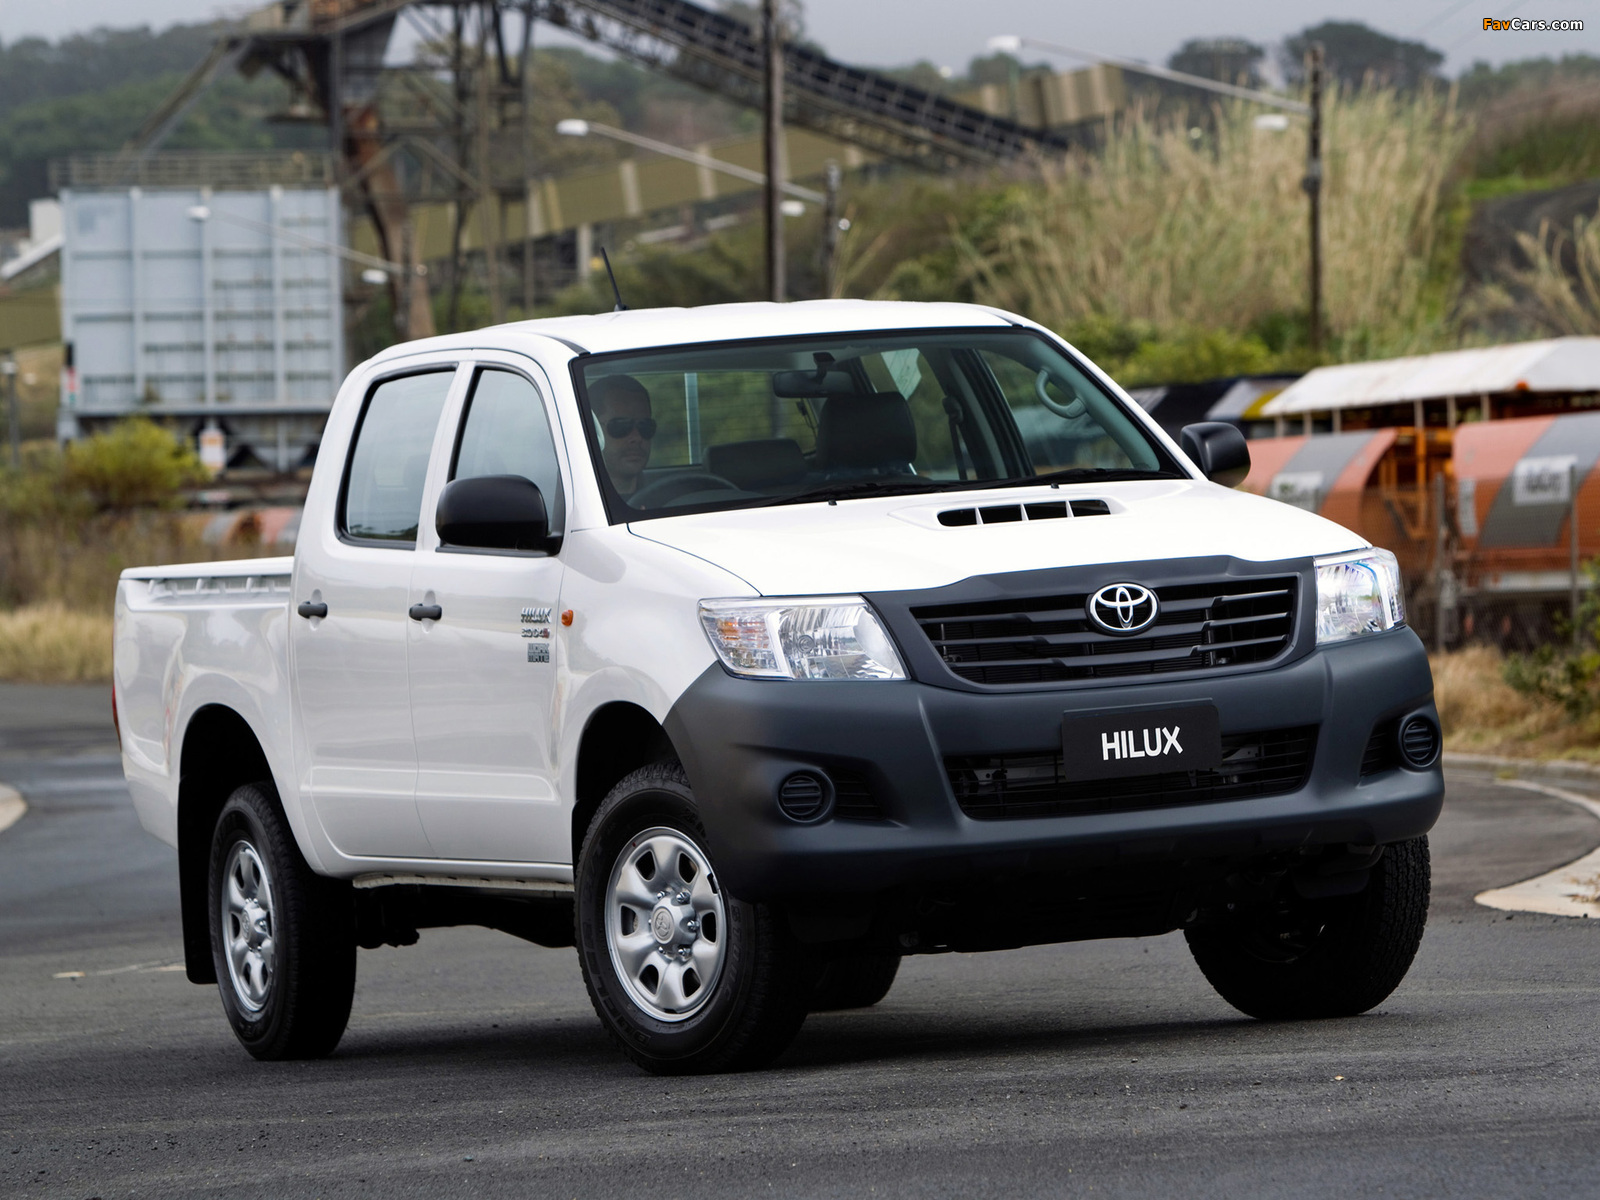 Toyota Hilux WorkMate Double Cab 4x4 AU-spec 2011 pictures (1600 x 1200)